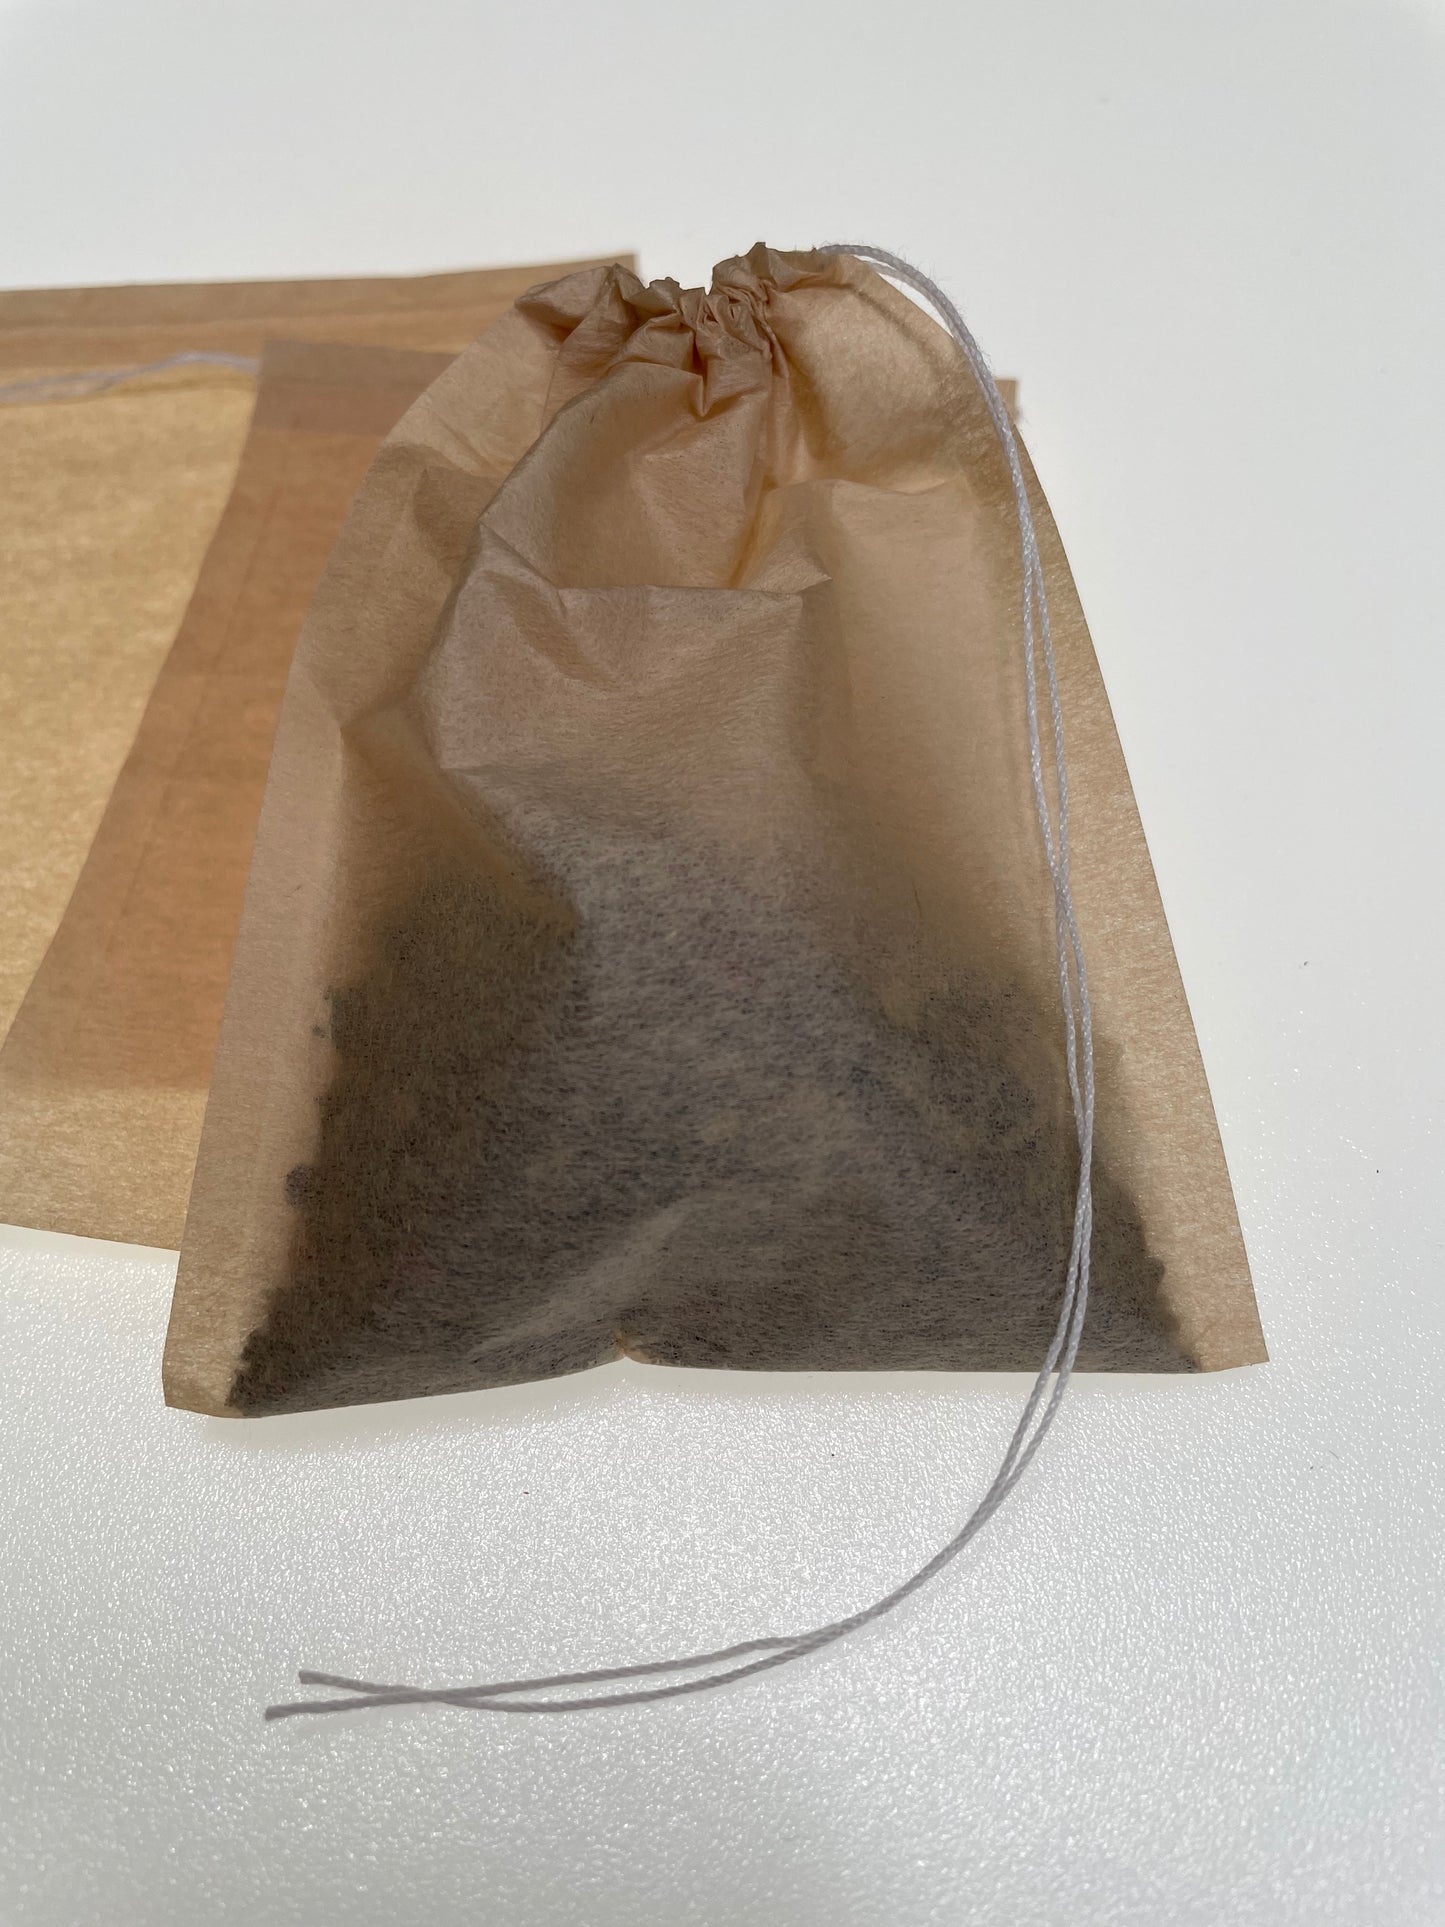 Tea Bags for Loose Leaf Tea, 12 pack, Filtered, Disposable, Drawstring